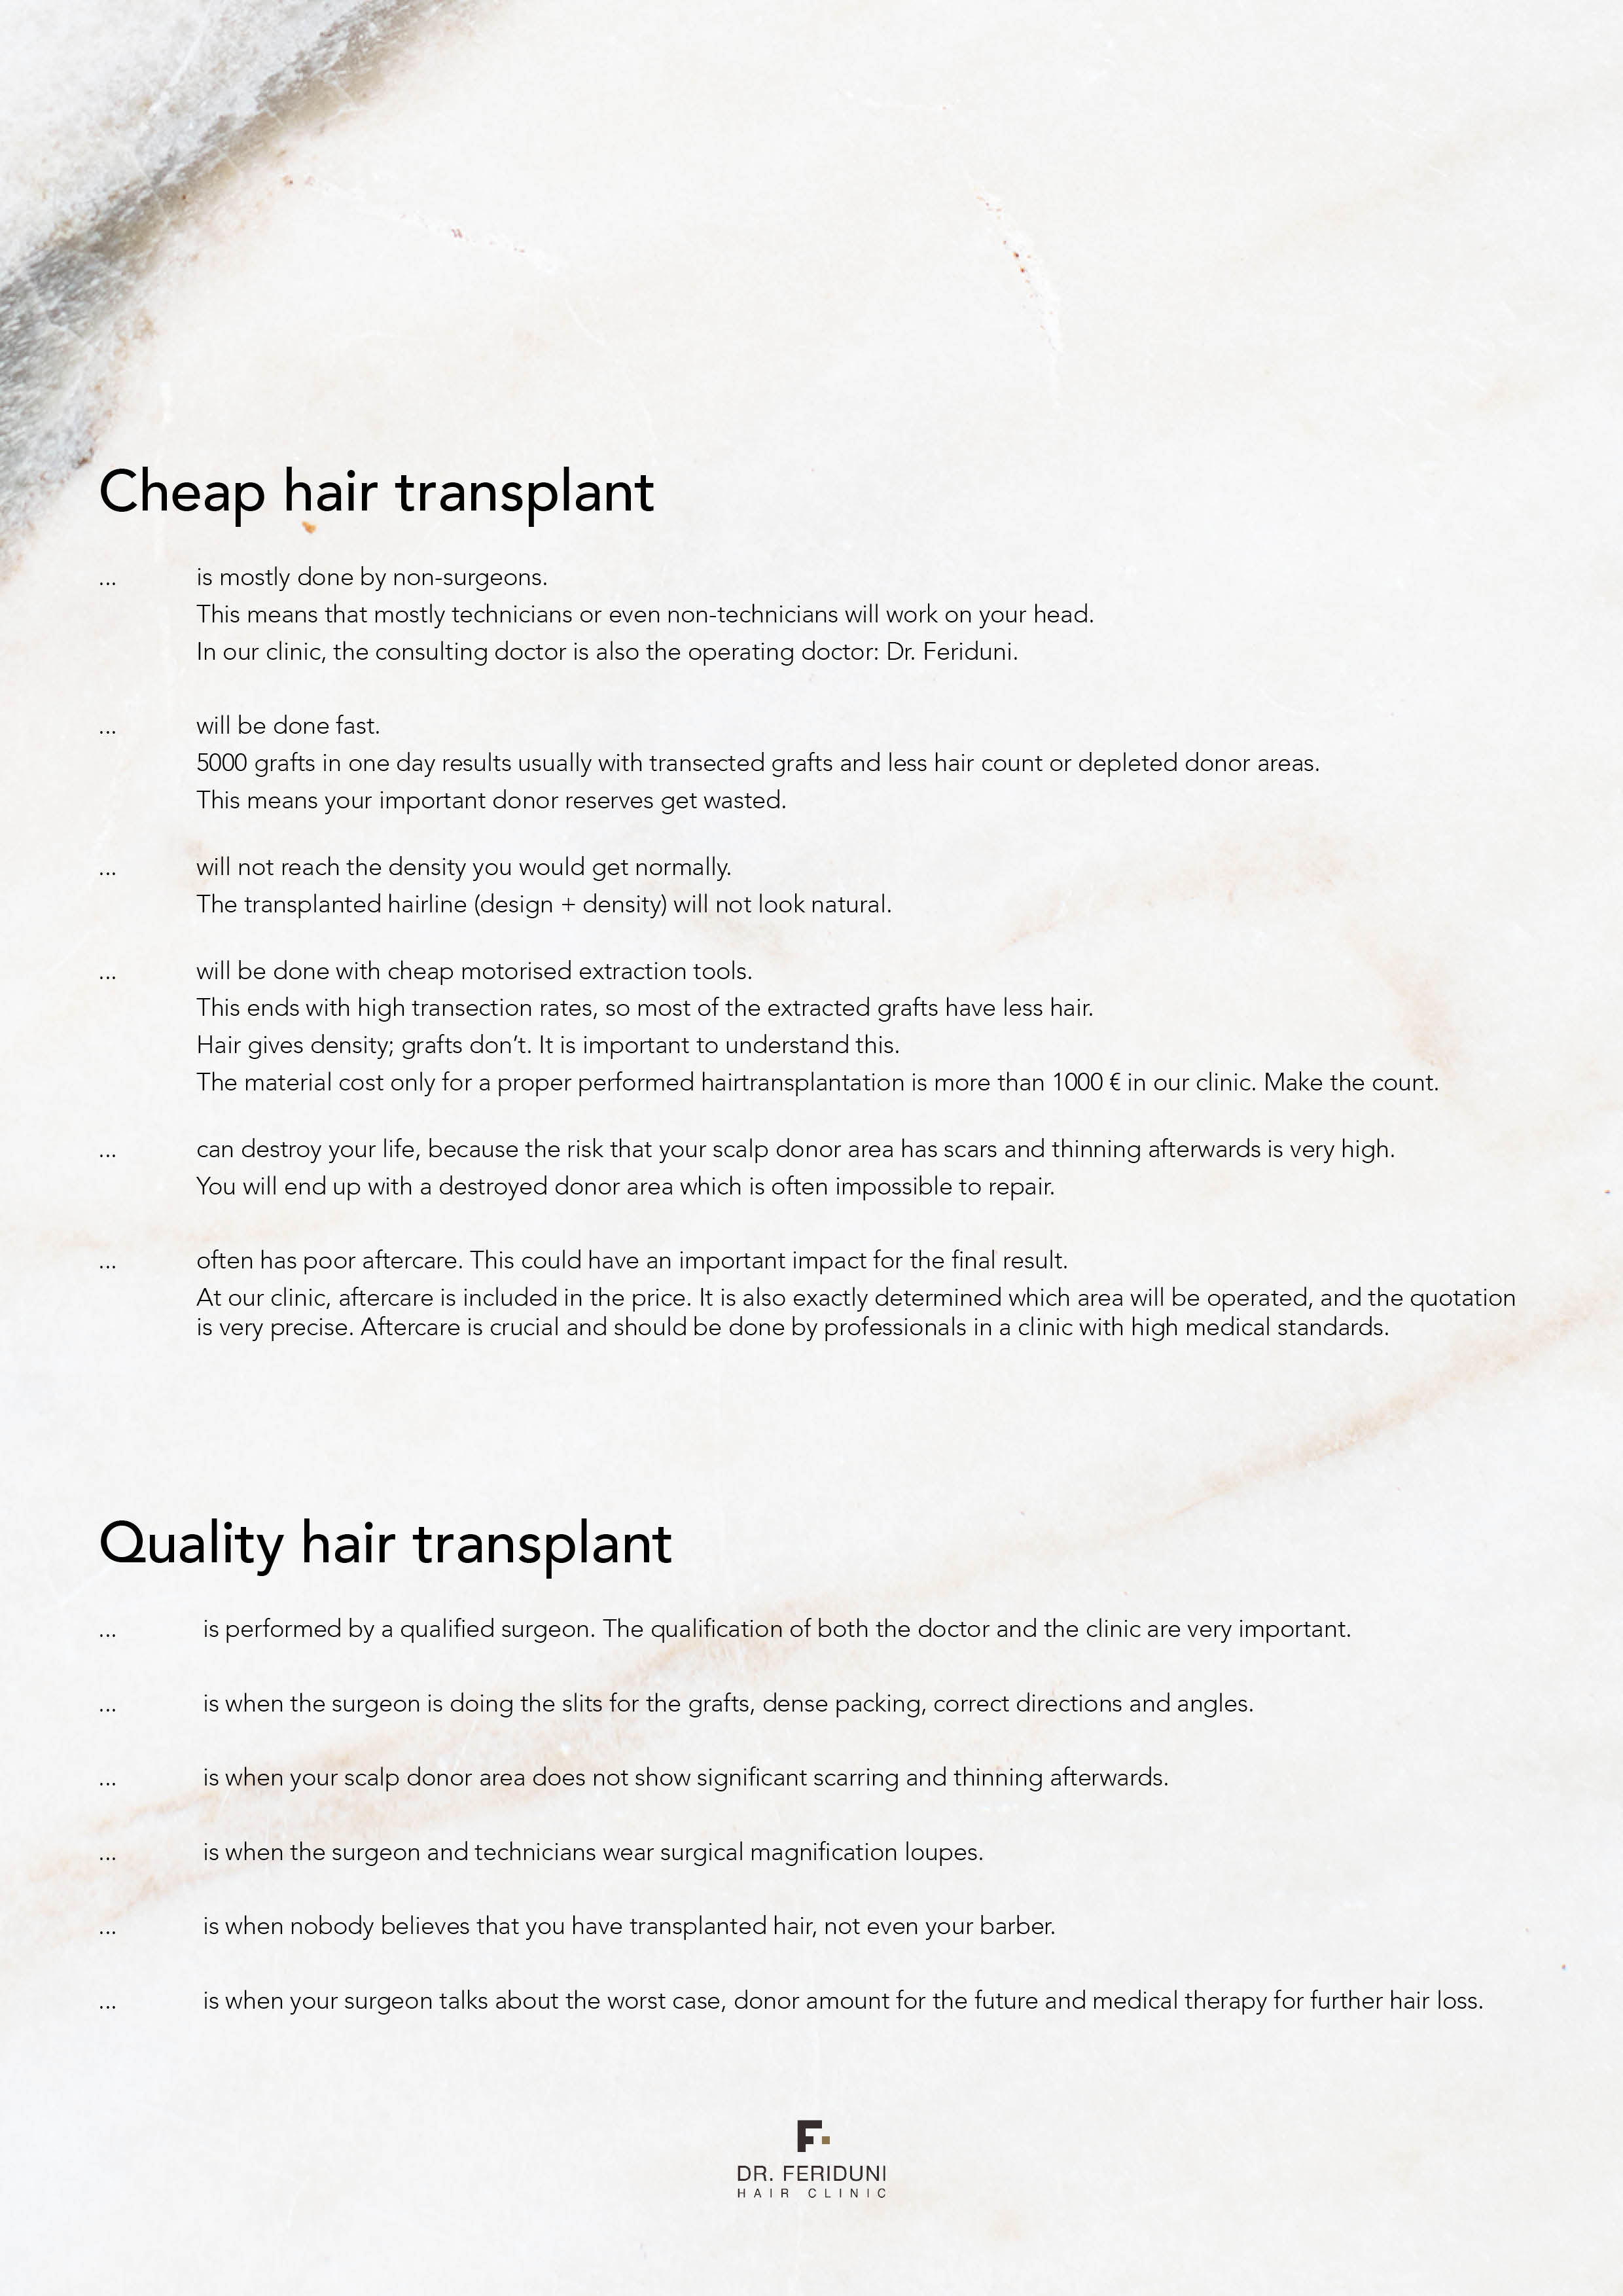 Cheap vs quality hair transplant